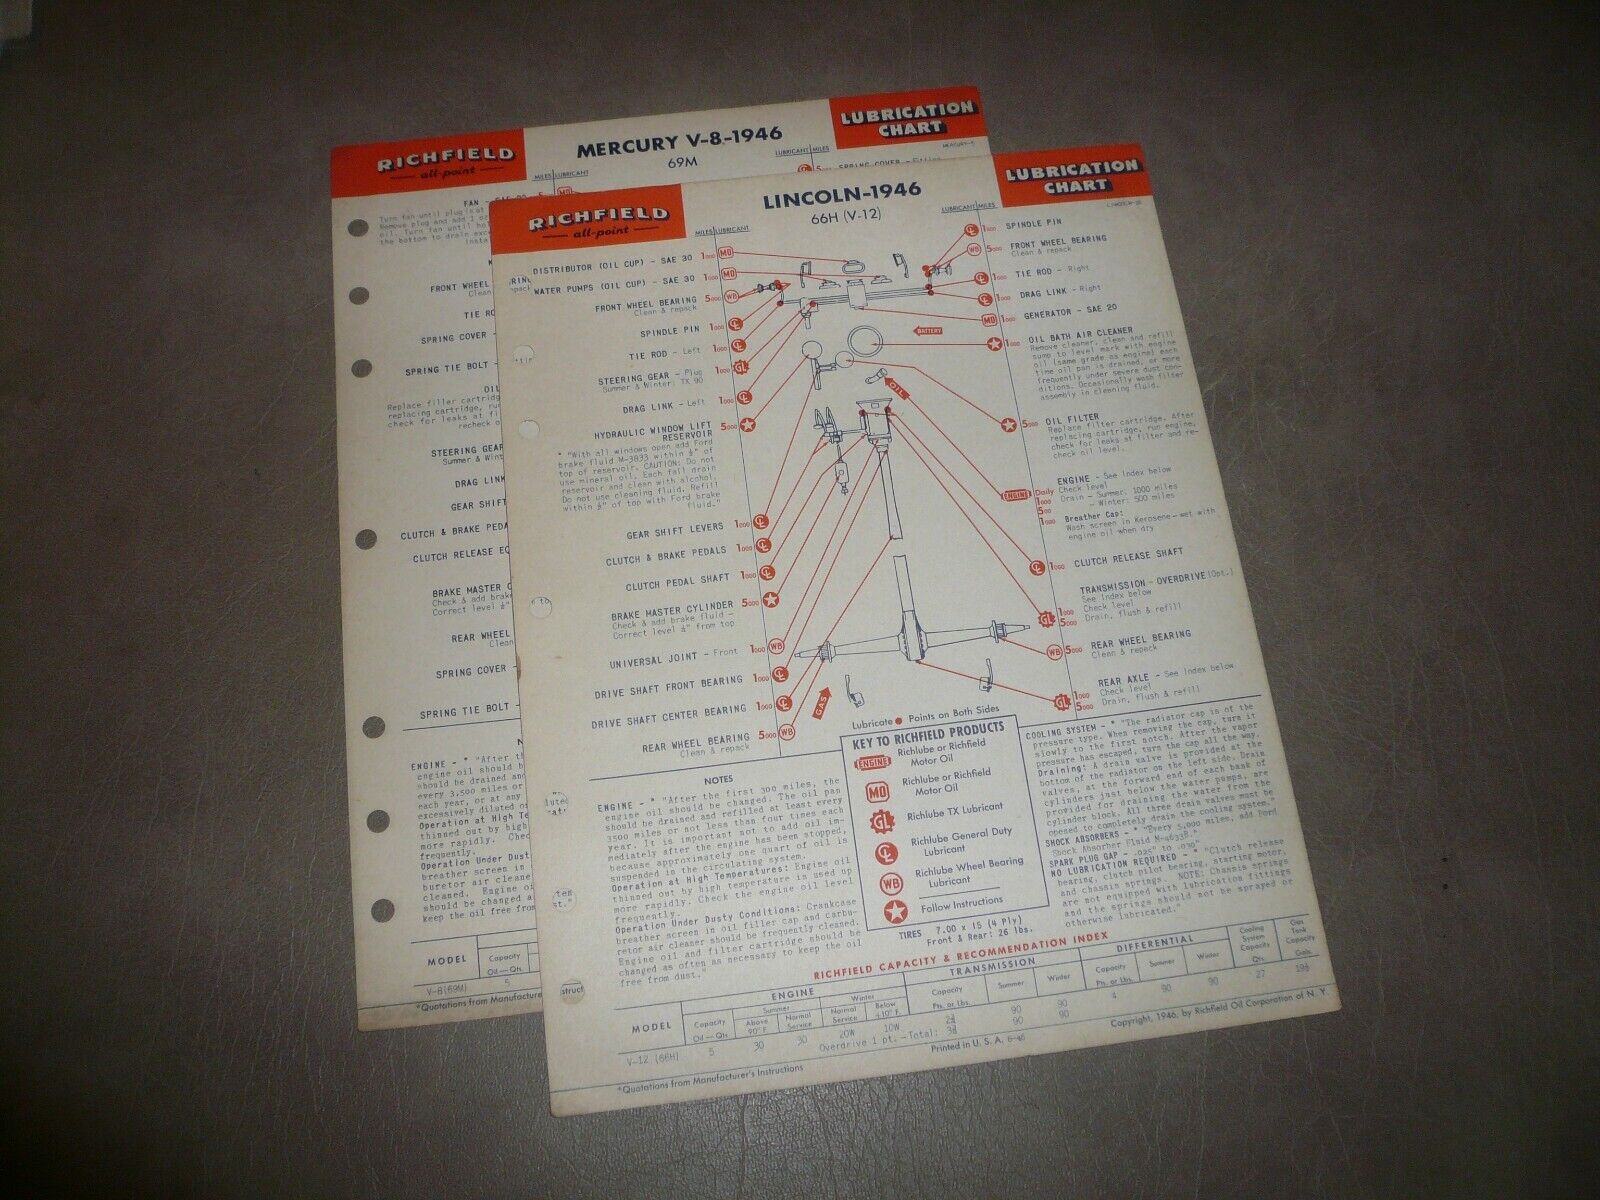 1946 Lincoln Mercury Richfield LUBRICATION CHARTS - Two Charts